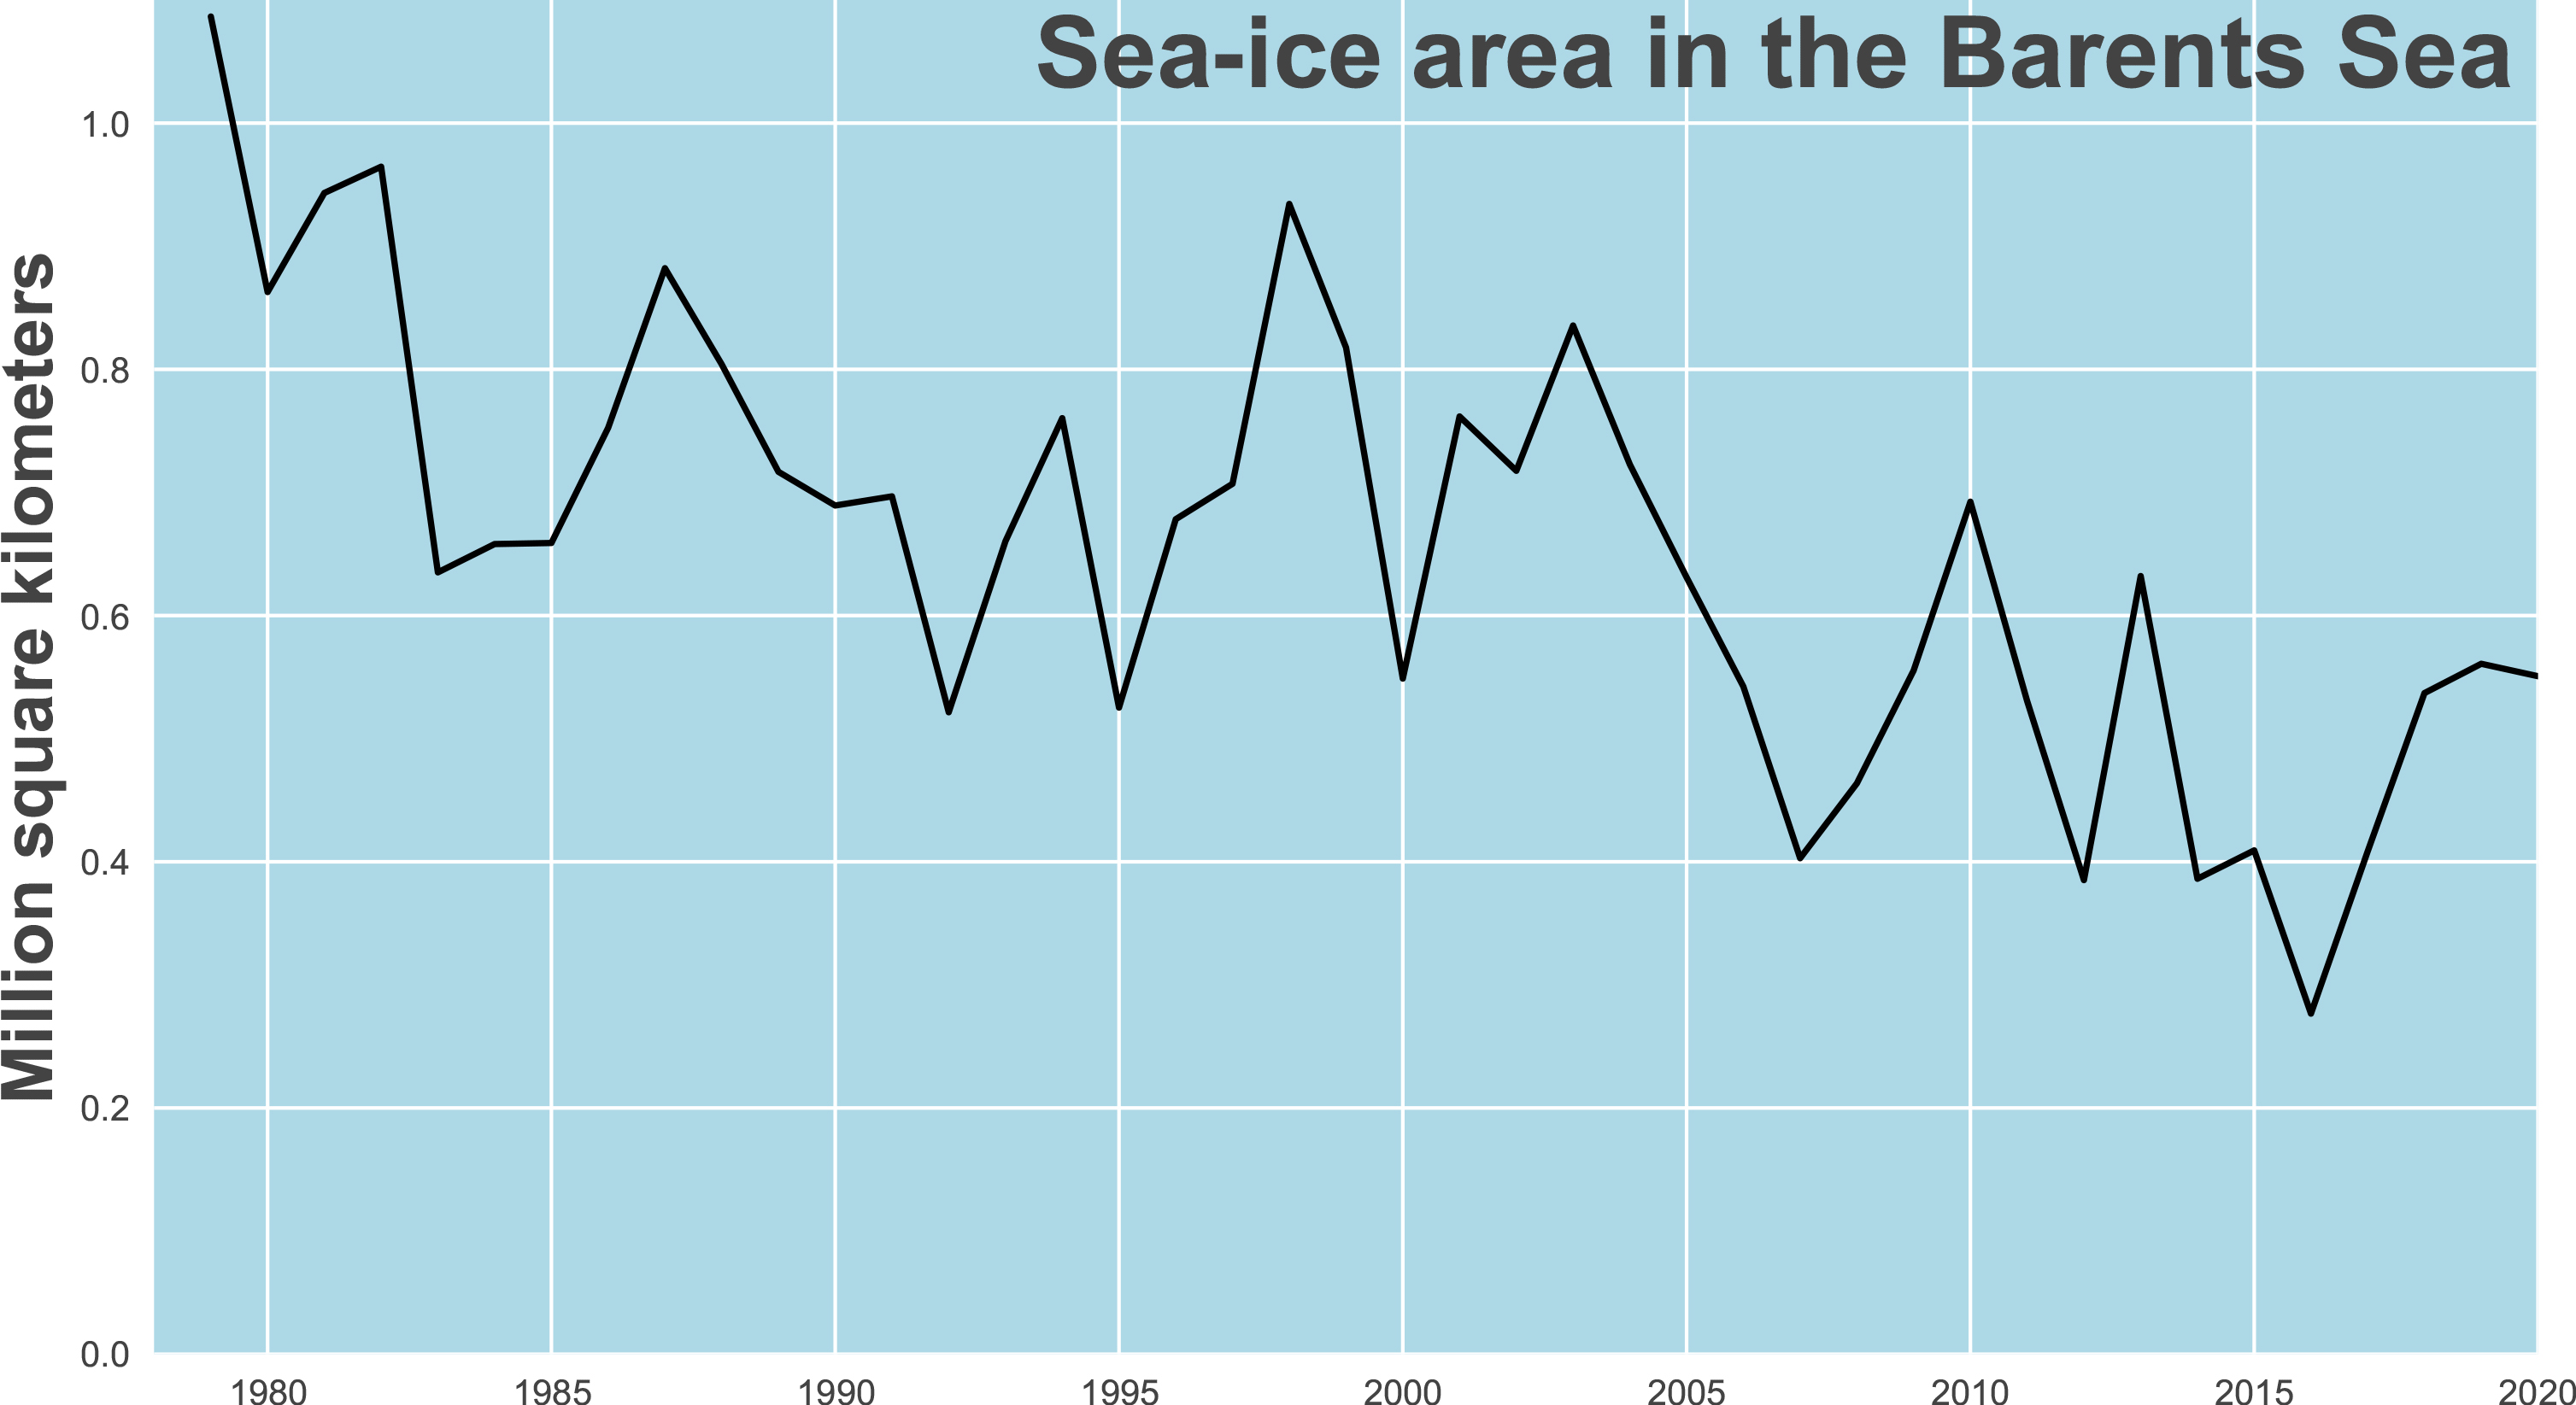 Havisarealet i Barentshavet. Mars 2020 er det mest nylege datapunktet til høgre. (Ill.: Jakob Dörr)